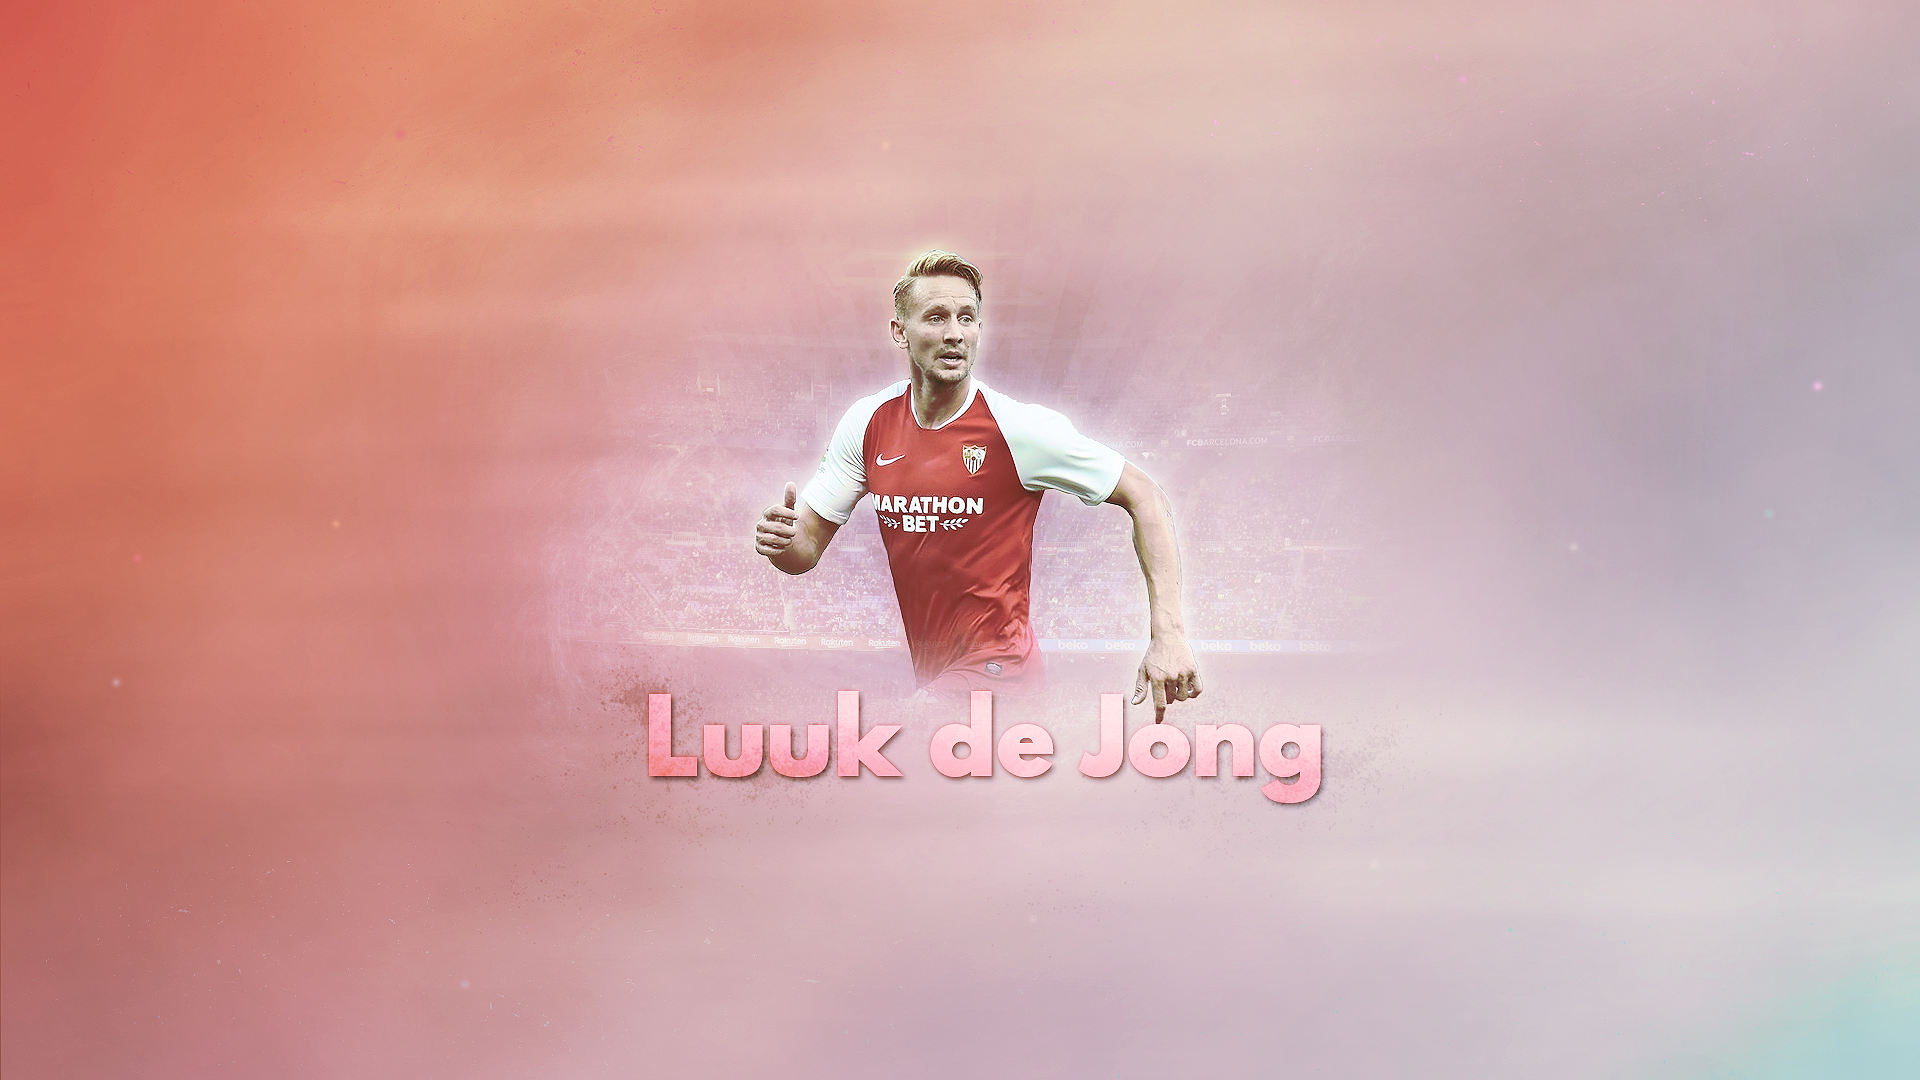 Luuk de Jong HD Wallpaper and Background Image